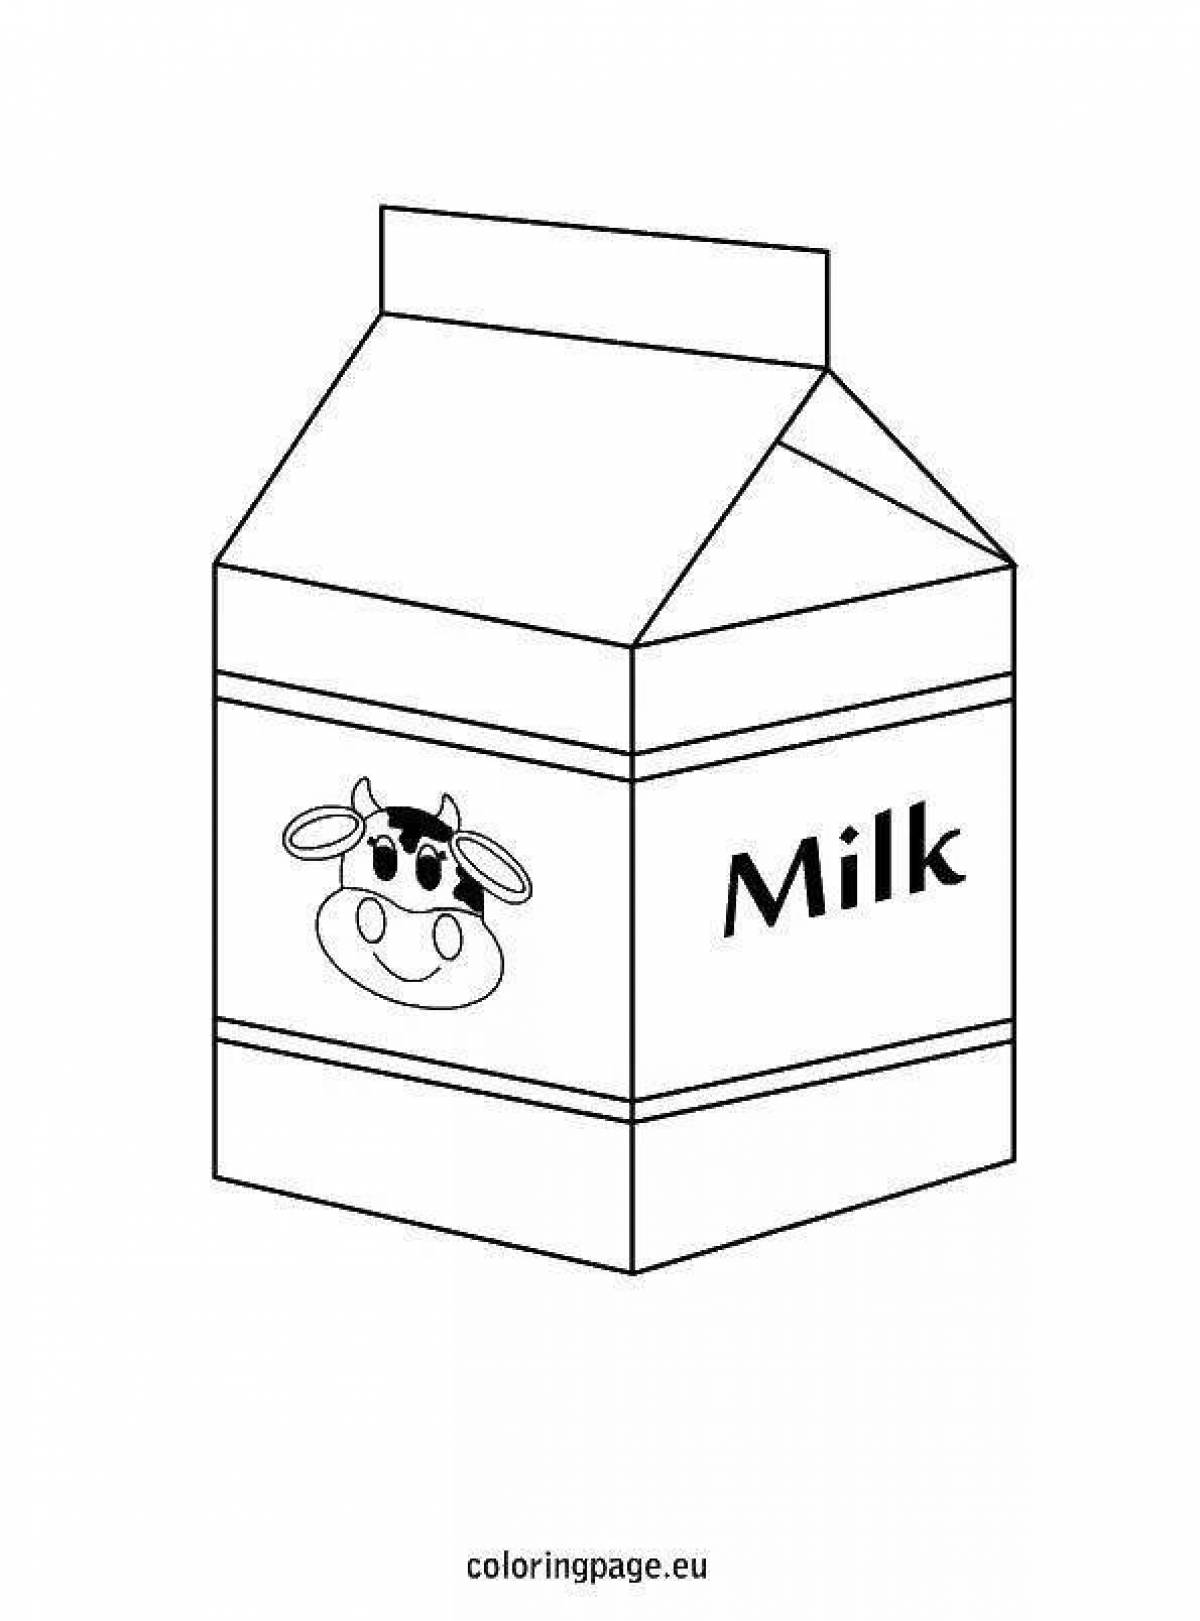 Fun milky coloring book for kids